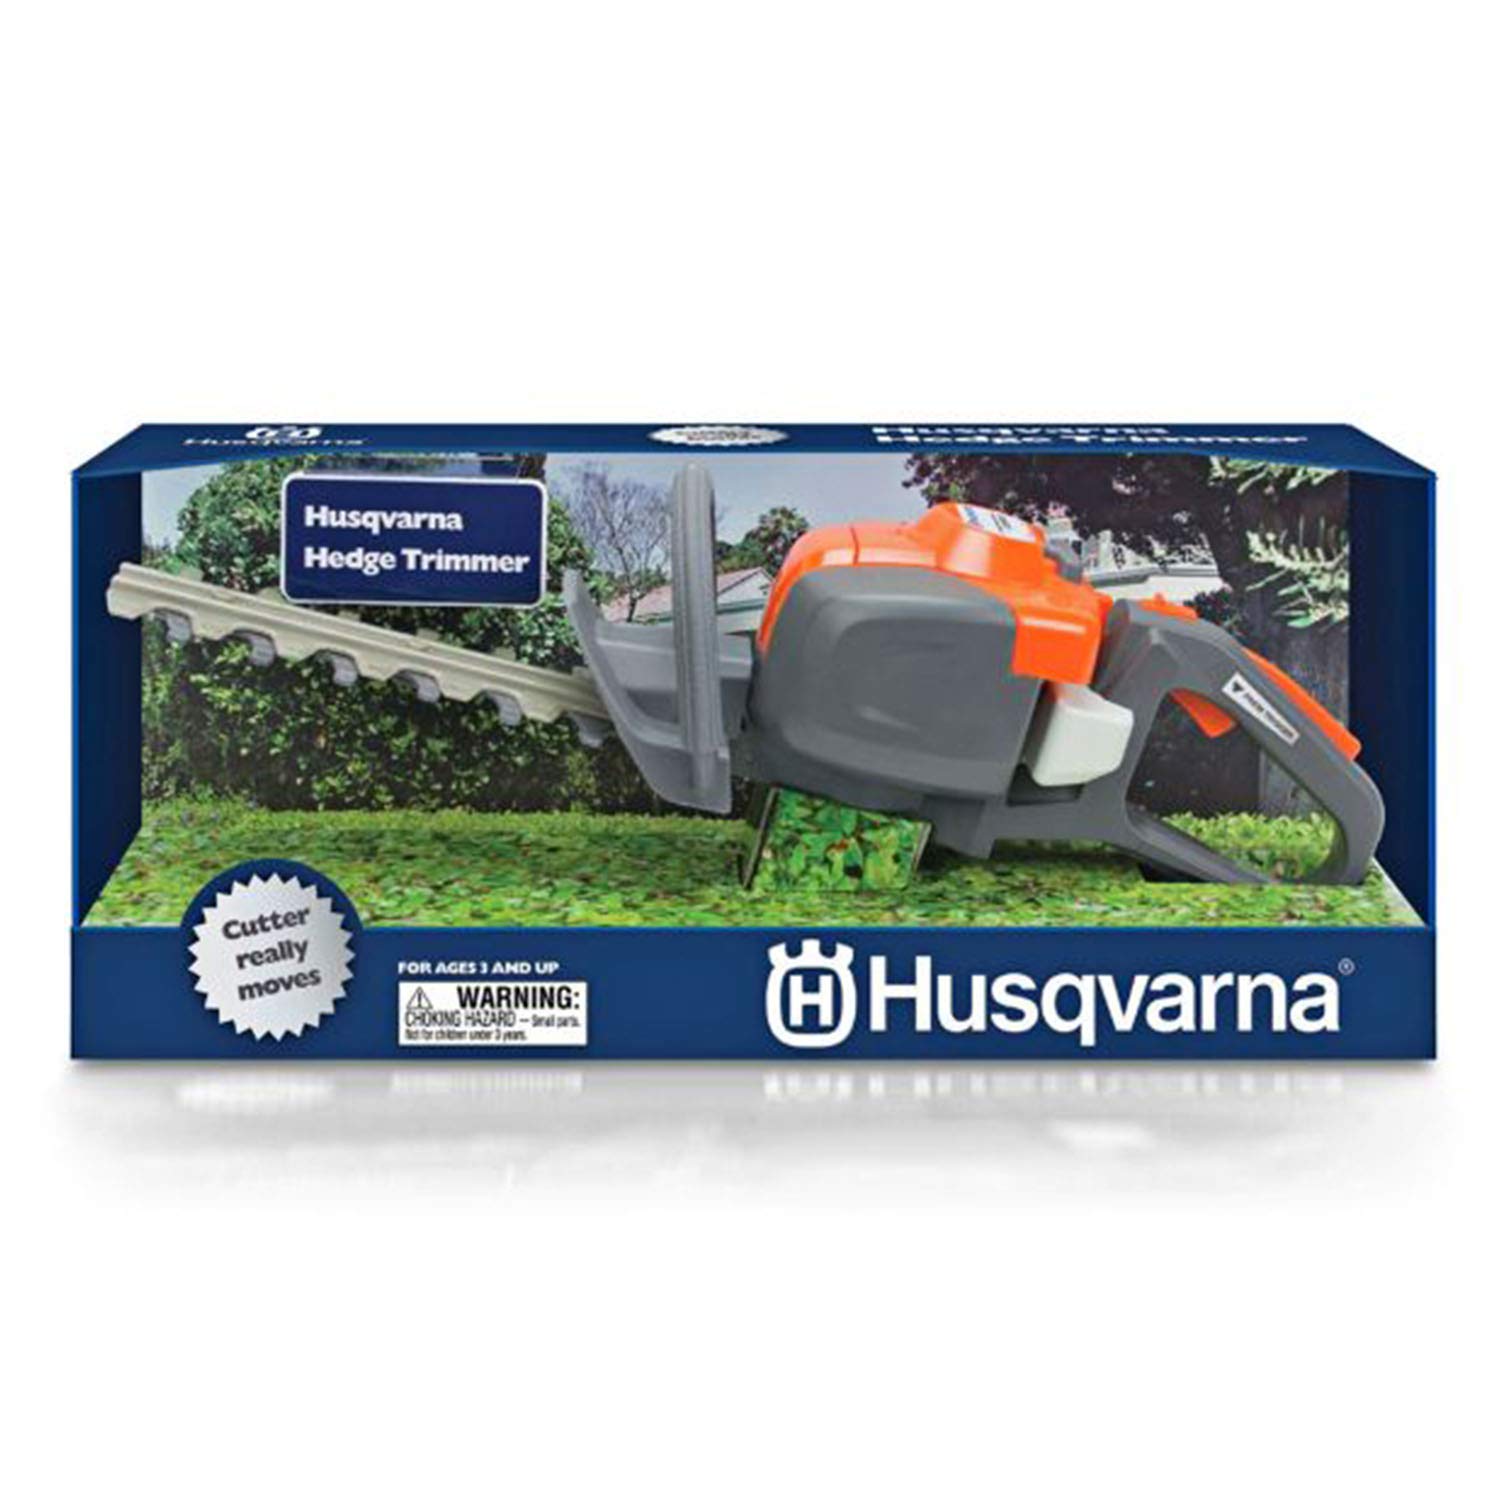 Husqvarna 585729103 122HD45 Toy Hedge Trimmer, Grey/orange